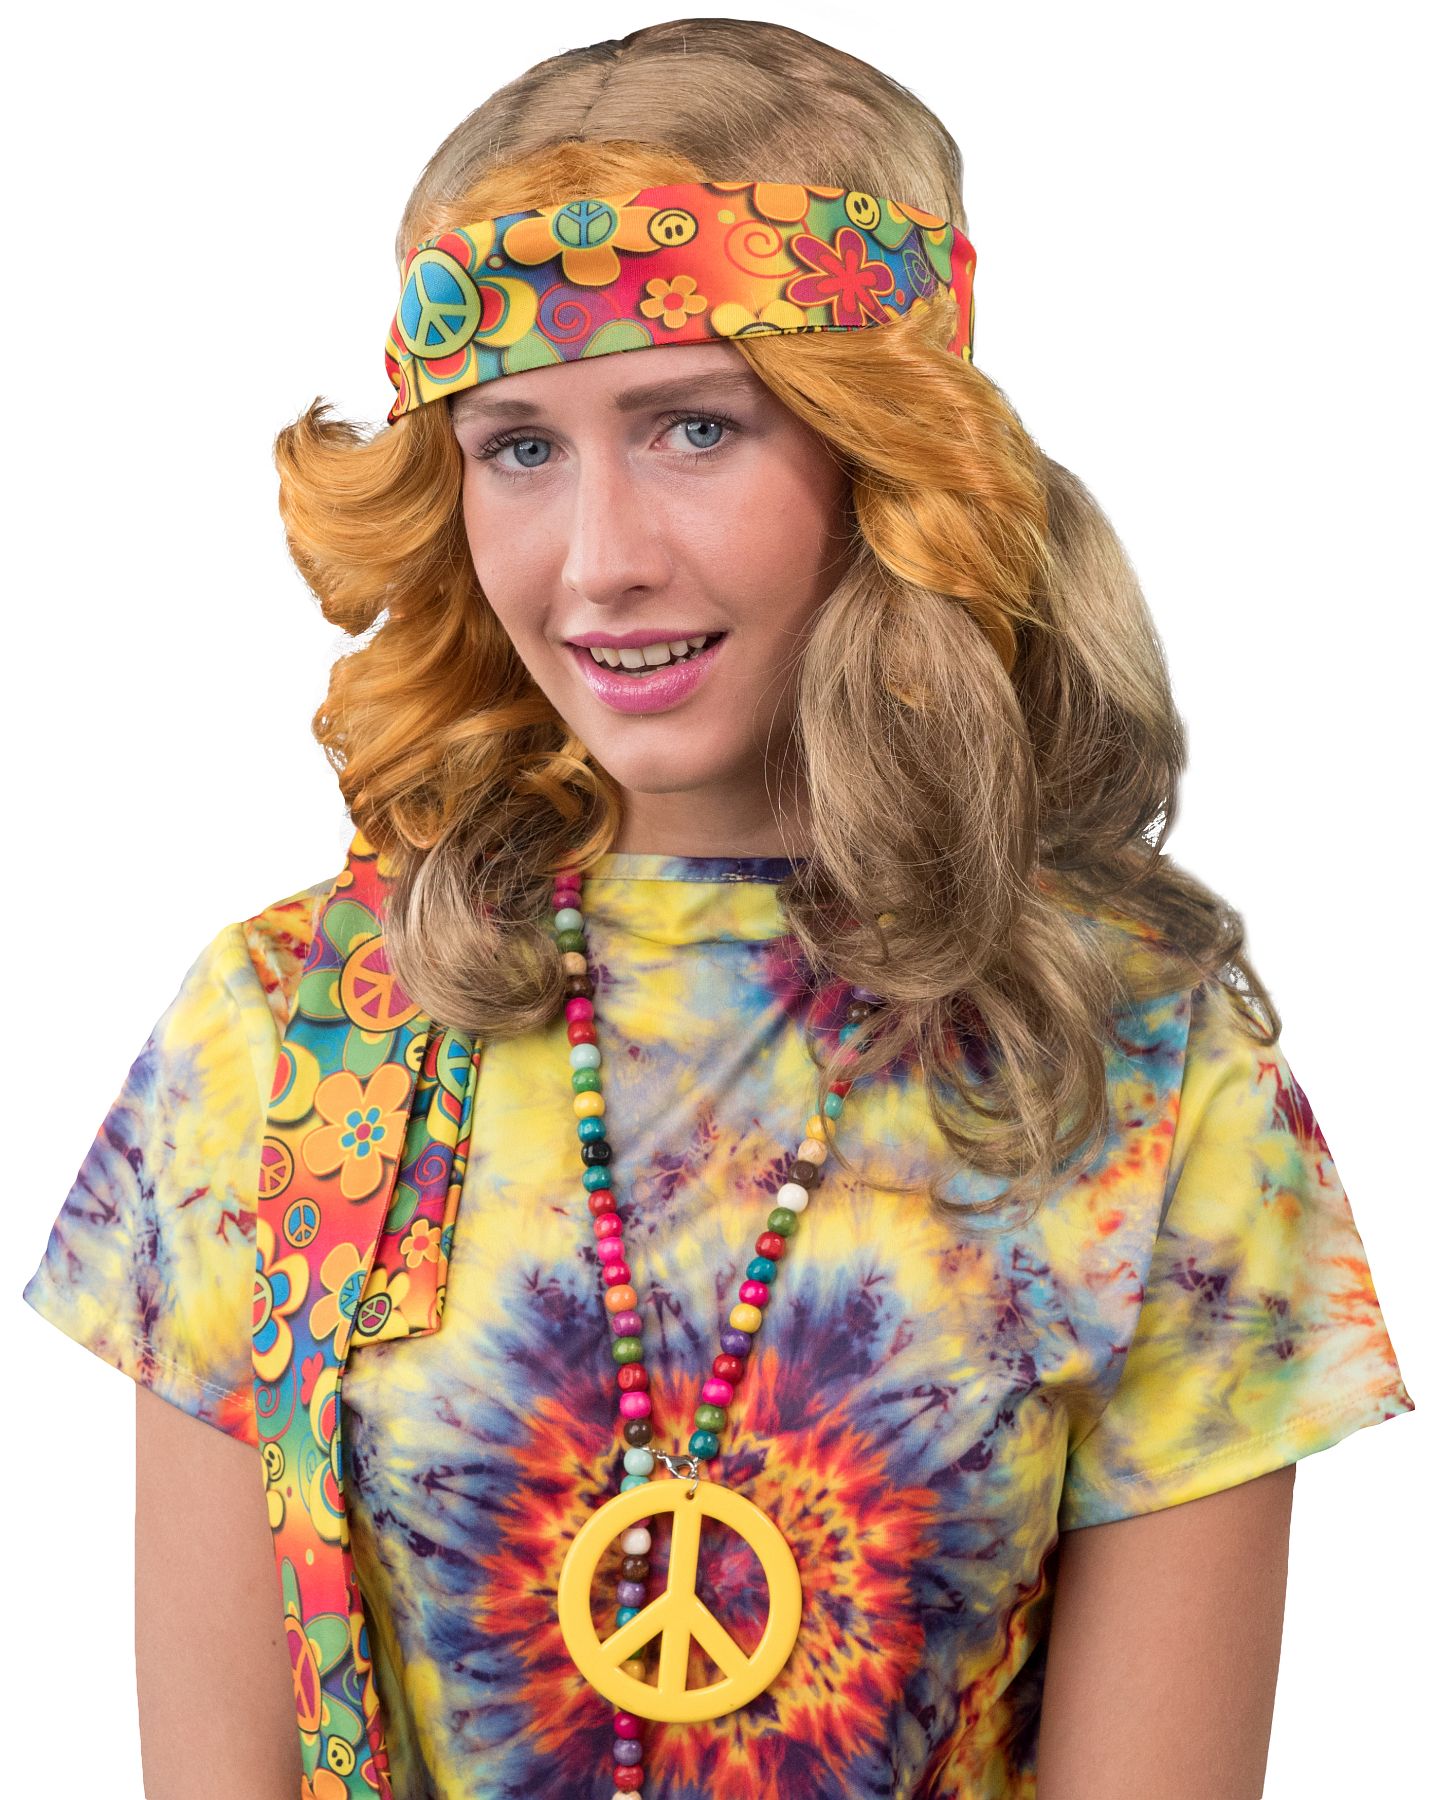 http://jfrassini.com/ For Head Wraps | Hippie hair, 1970s hairstyles, 70s  hair